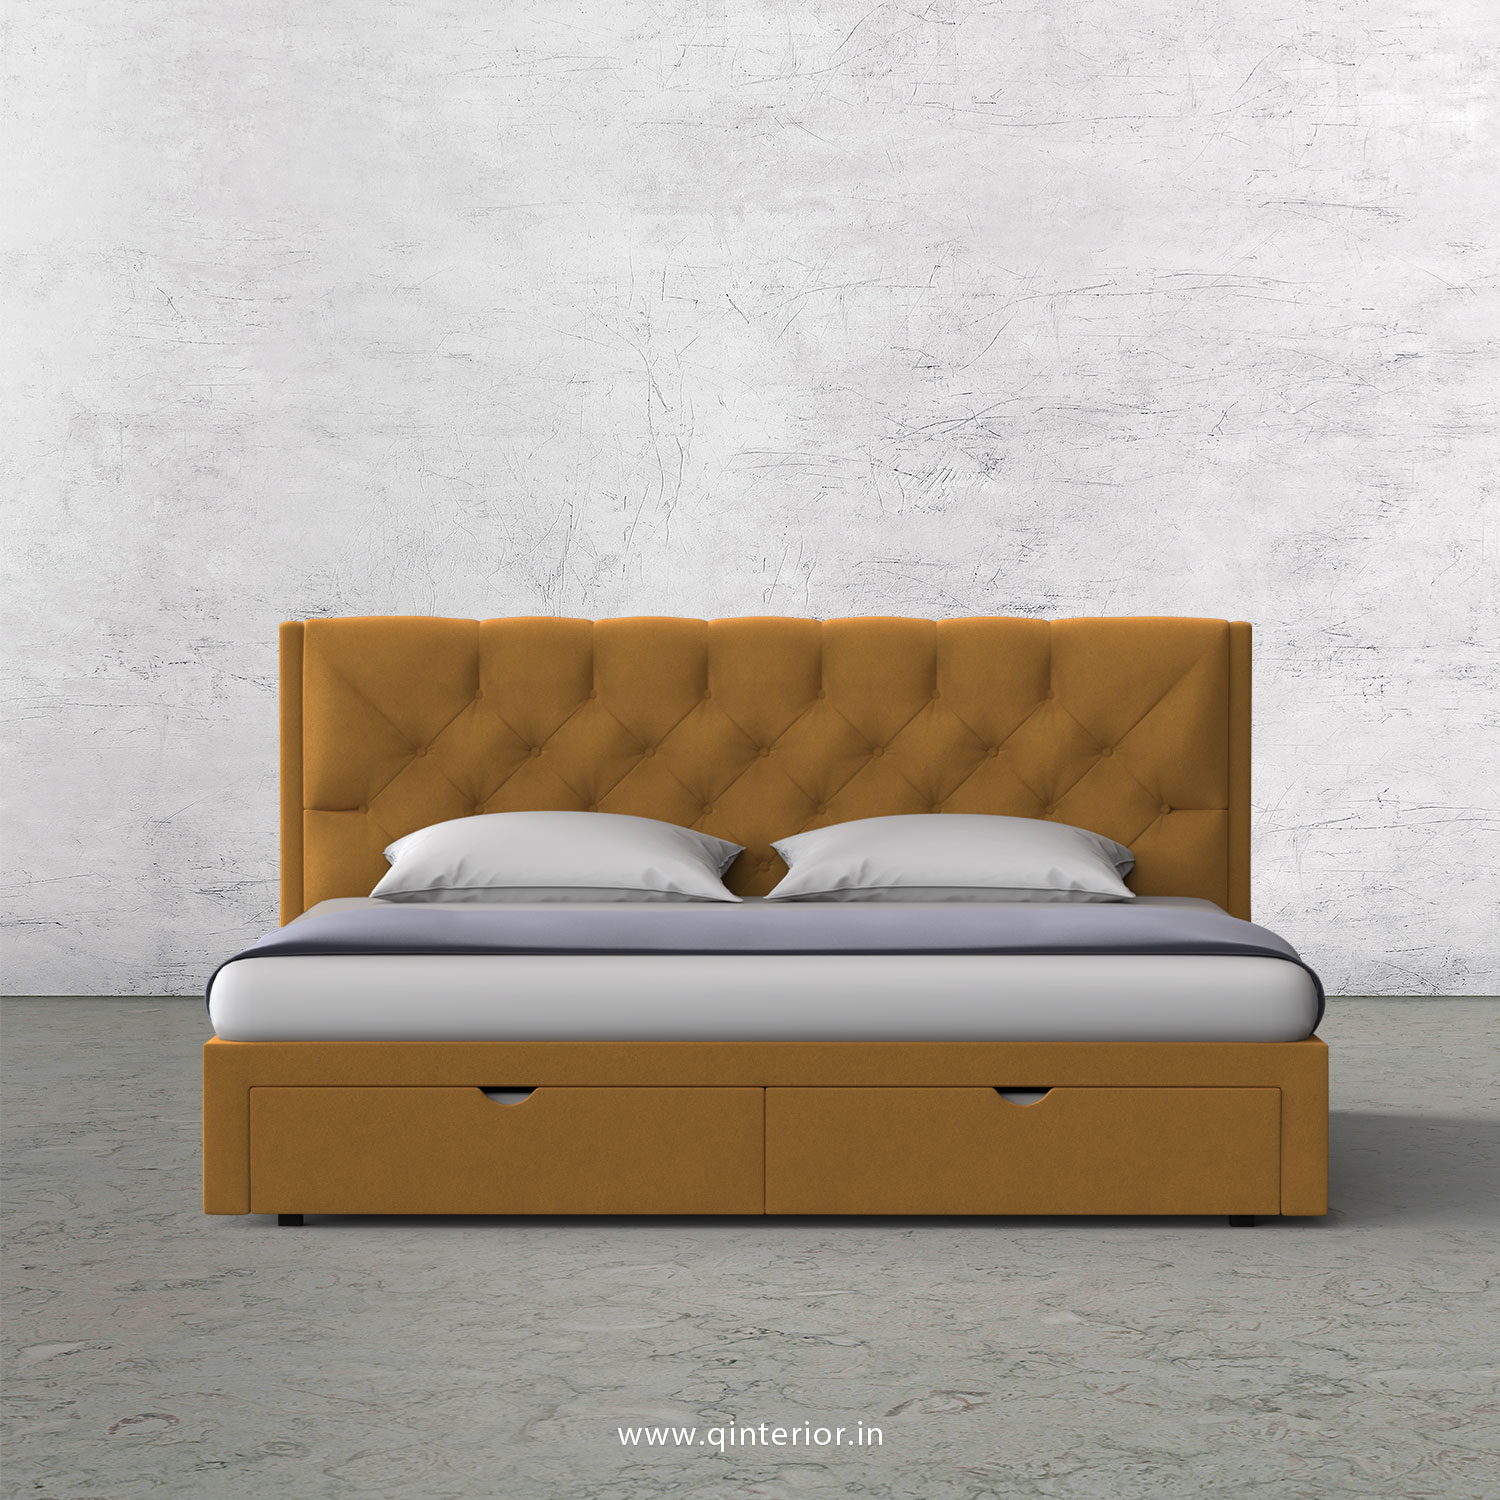 Scorpius King Size Storage Bed in Velvet Fabric - KBD001 VL18